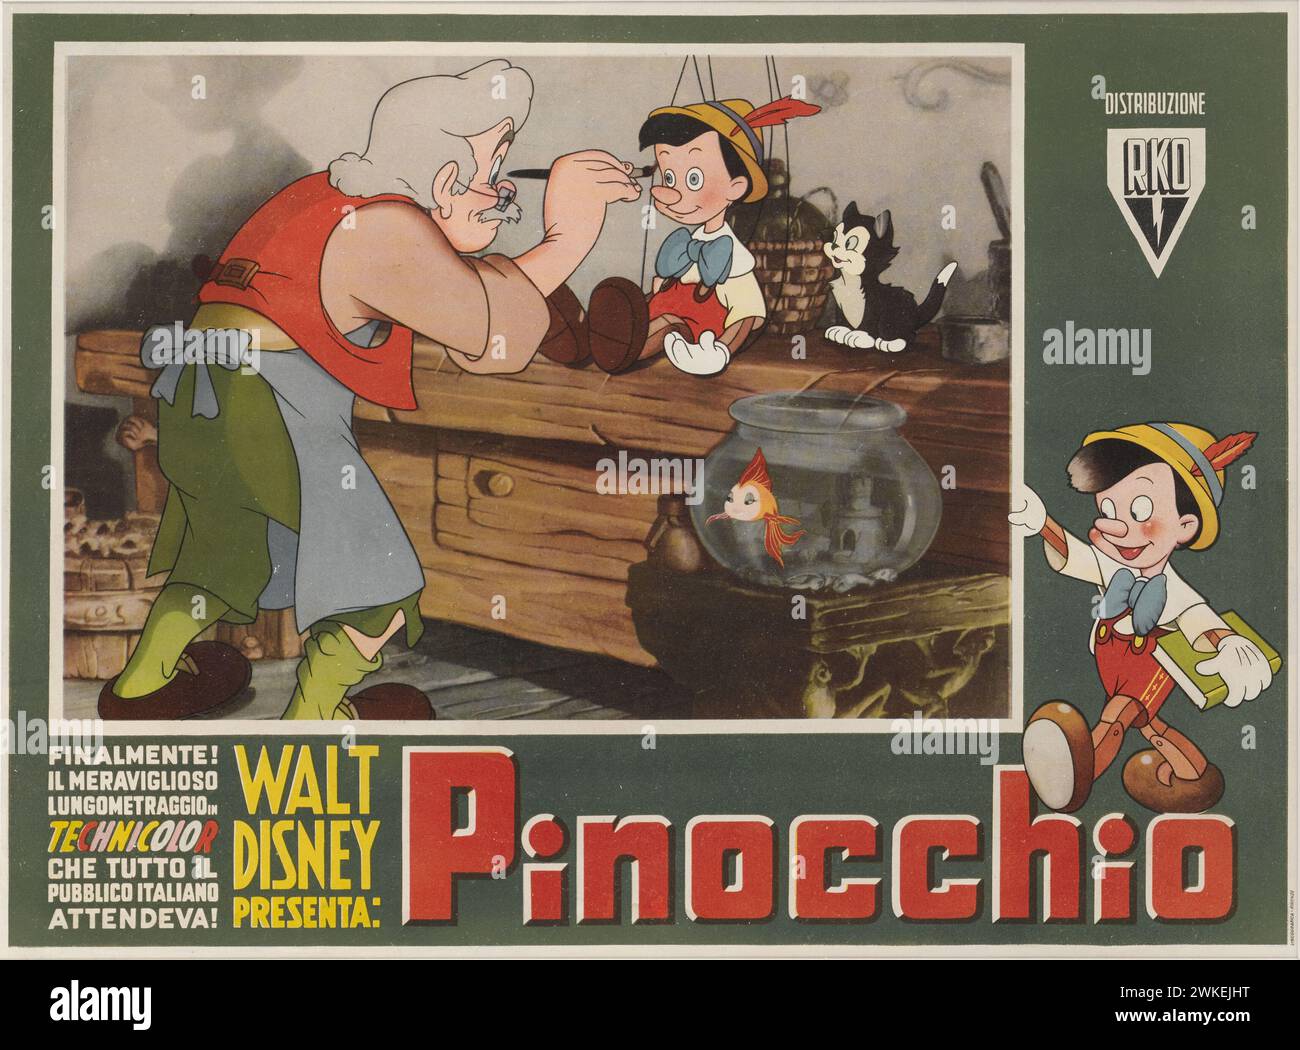 Poster del film "Pinocchio". Museo: © The Walt Disney Company. AUTORE: WALT DISNEY PRODUCTIONS. Foto Stock